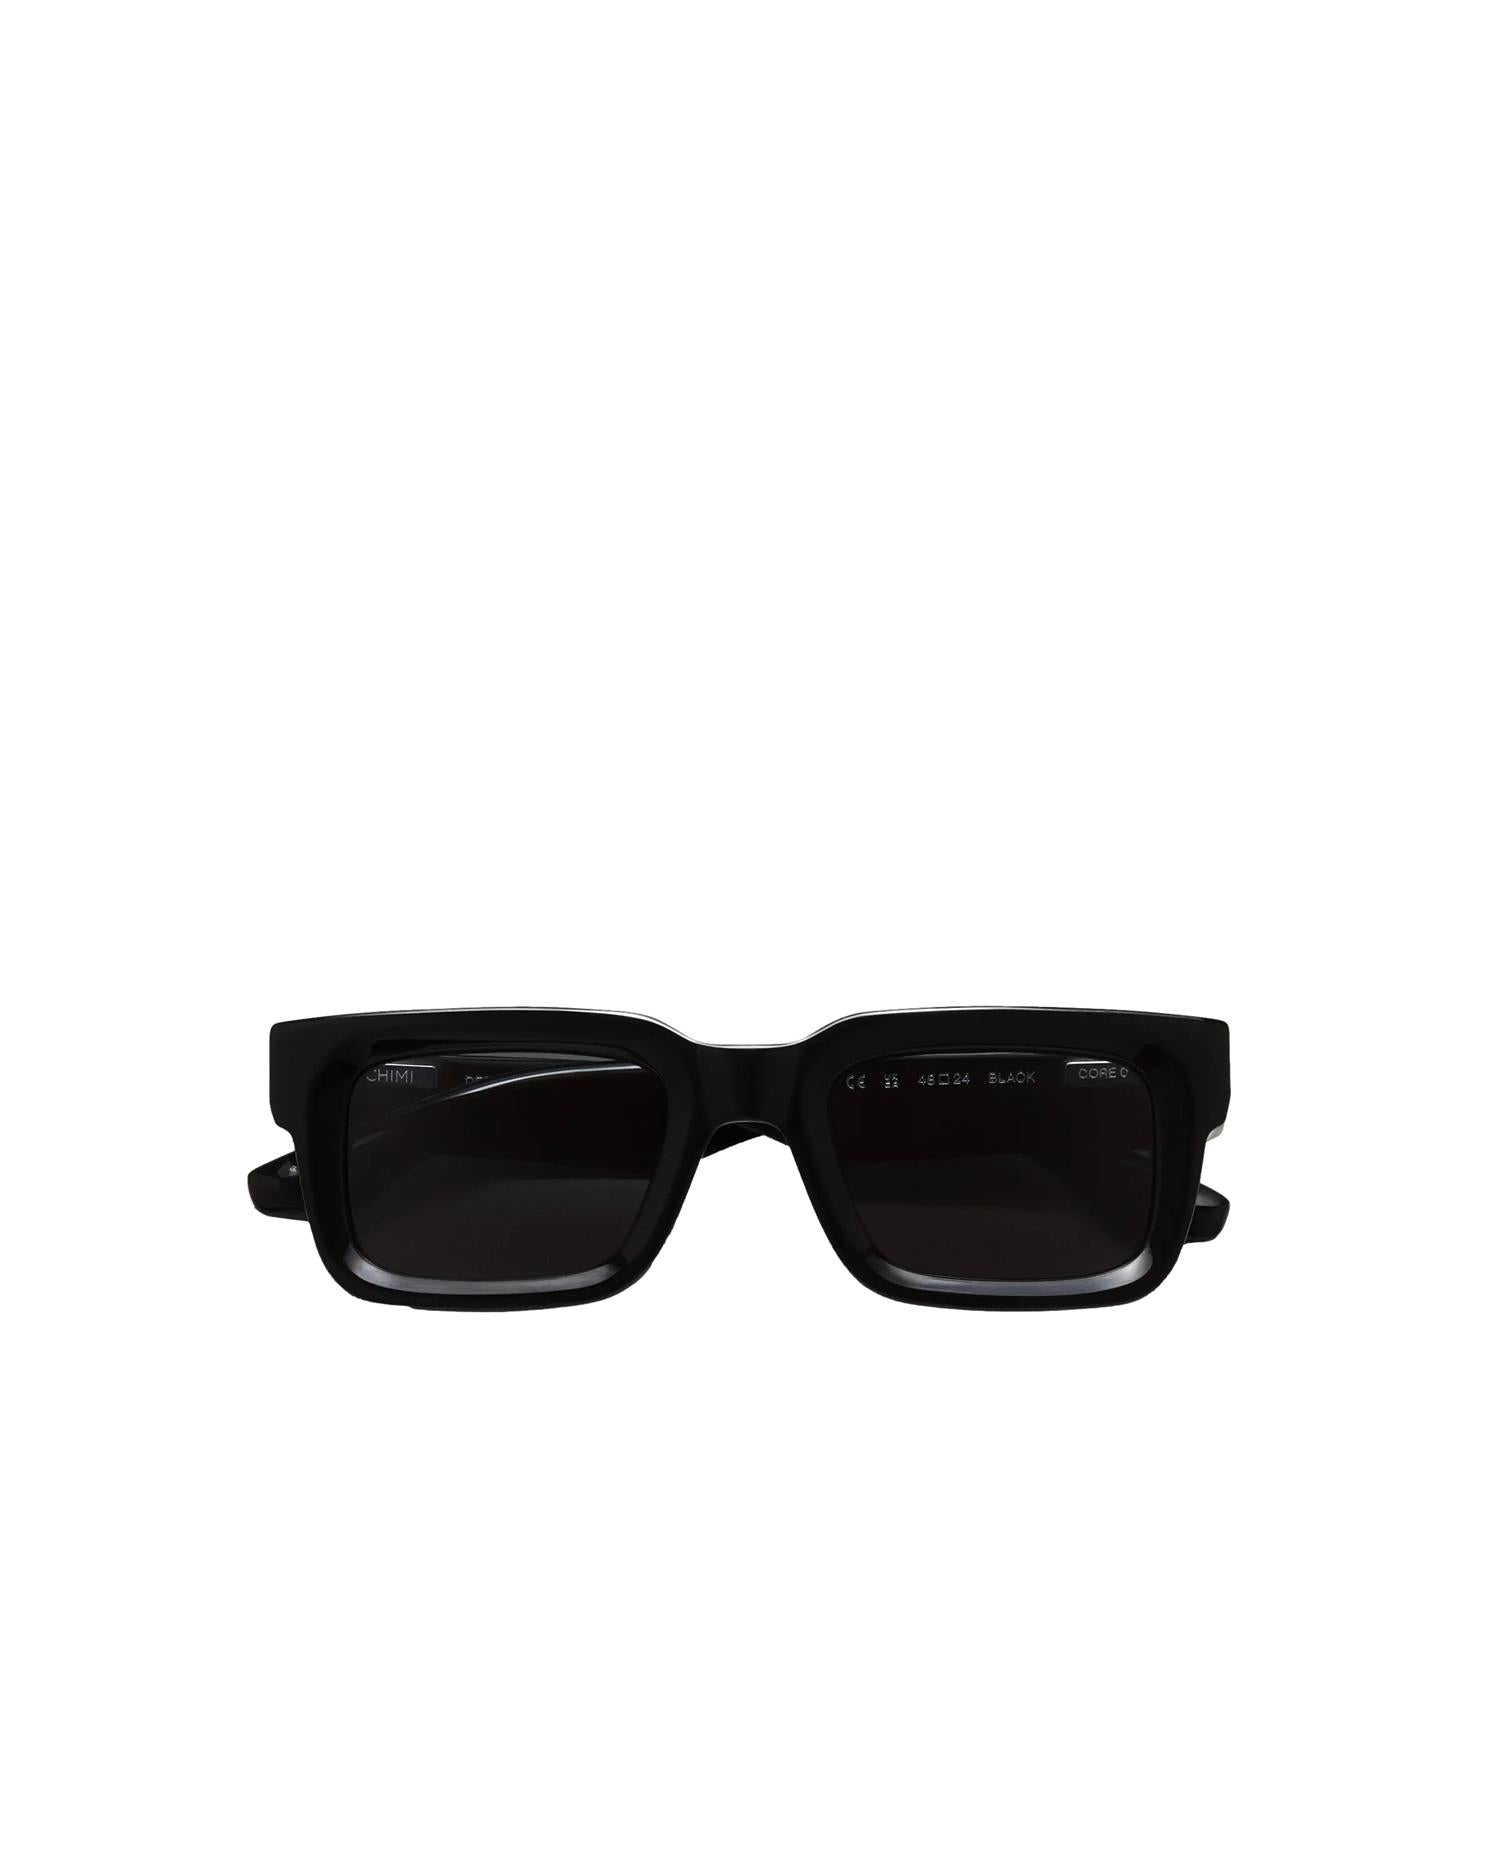 Chimi Eyewear Black 05 Solbriller Sort - modostore.no